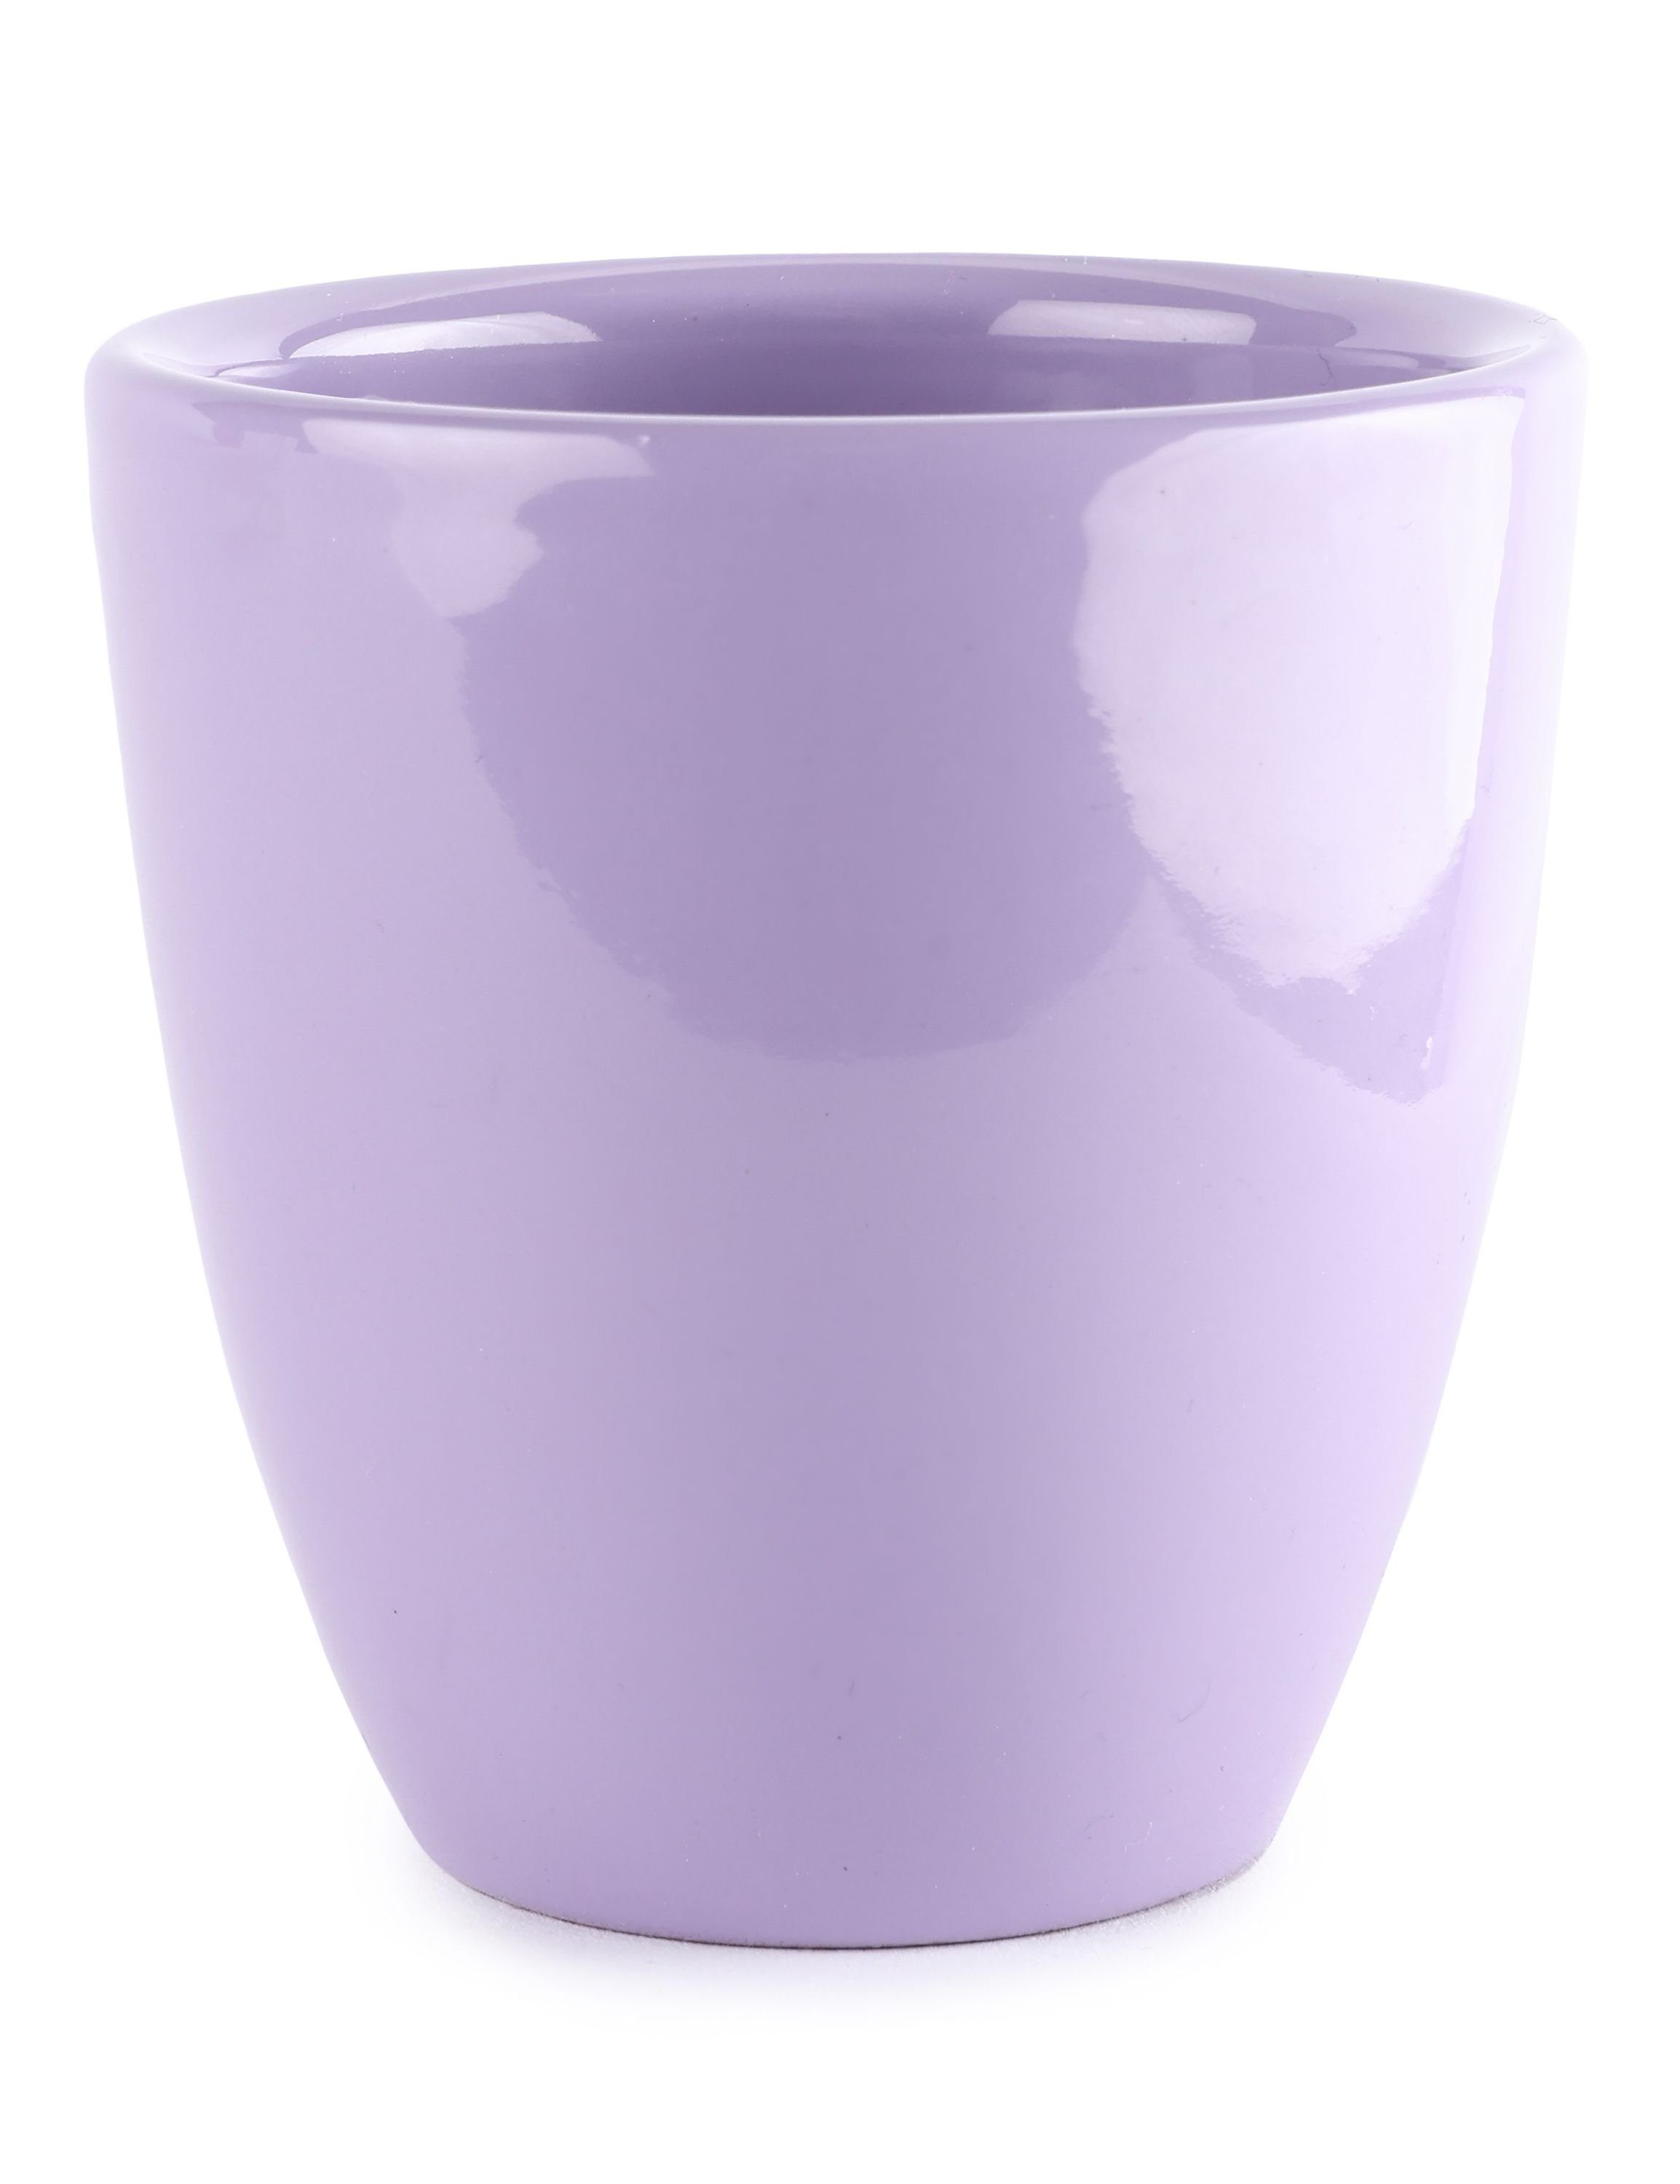 Garronda Keramik Blumentopf Pflanztopf Lavender045 GD-0017 Blumentopf